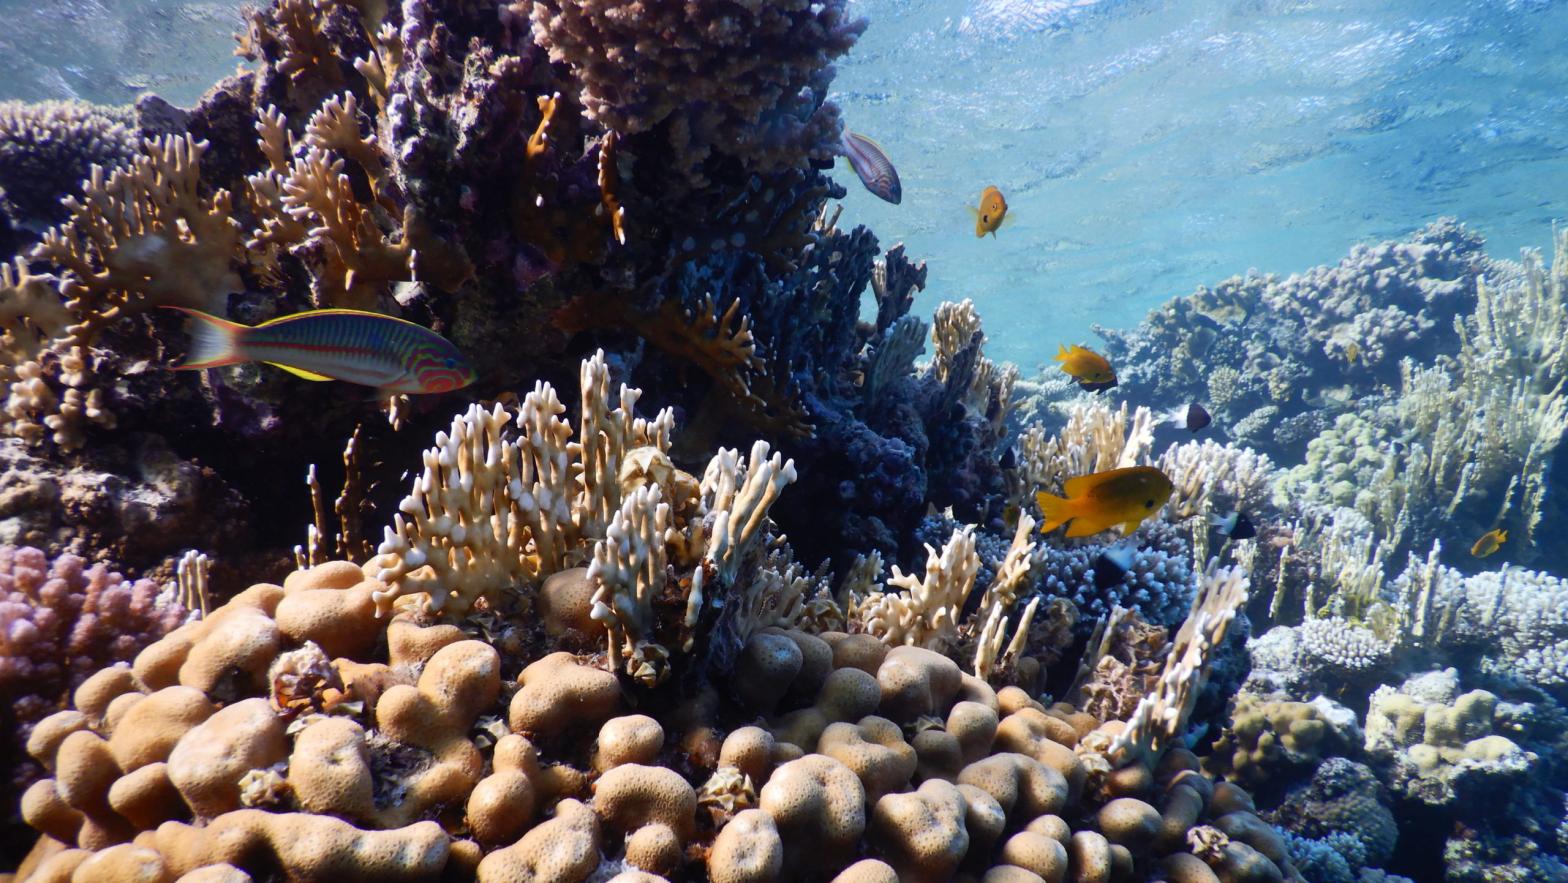 Corals in the Gulf of Aqaba in the Red Sea. (Image: Maoz Fine)